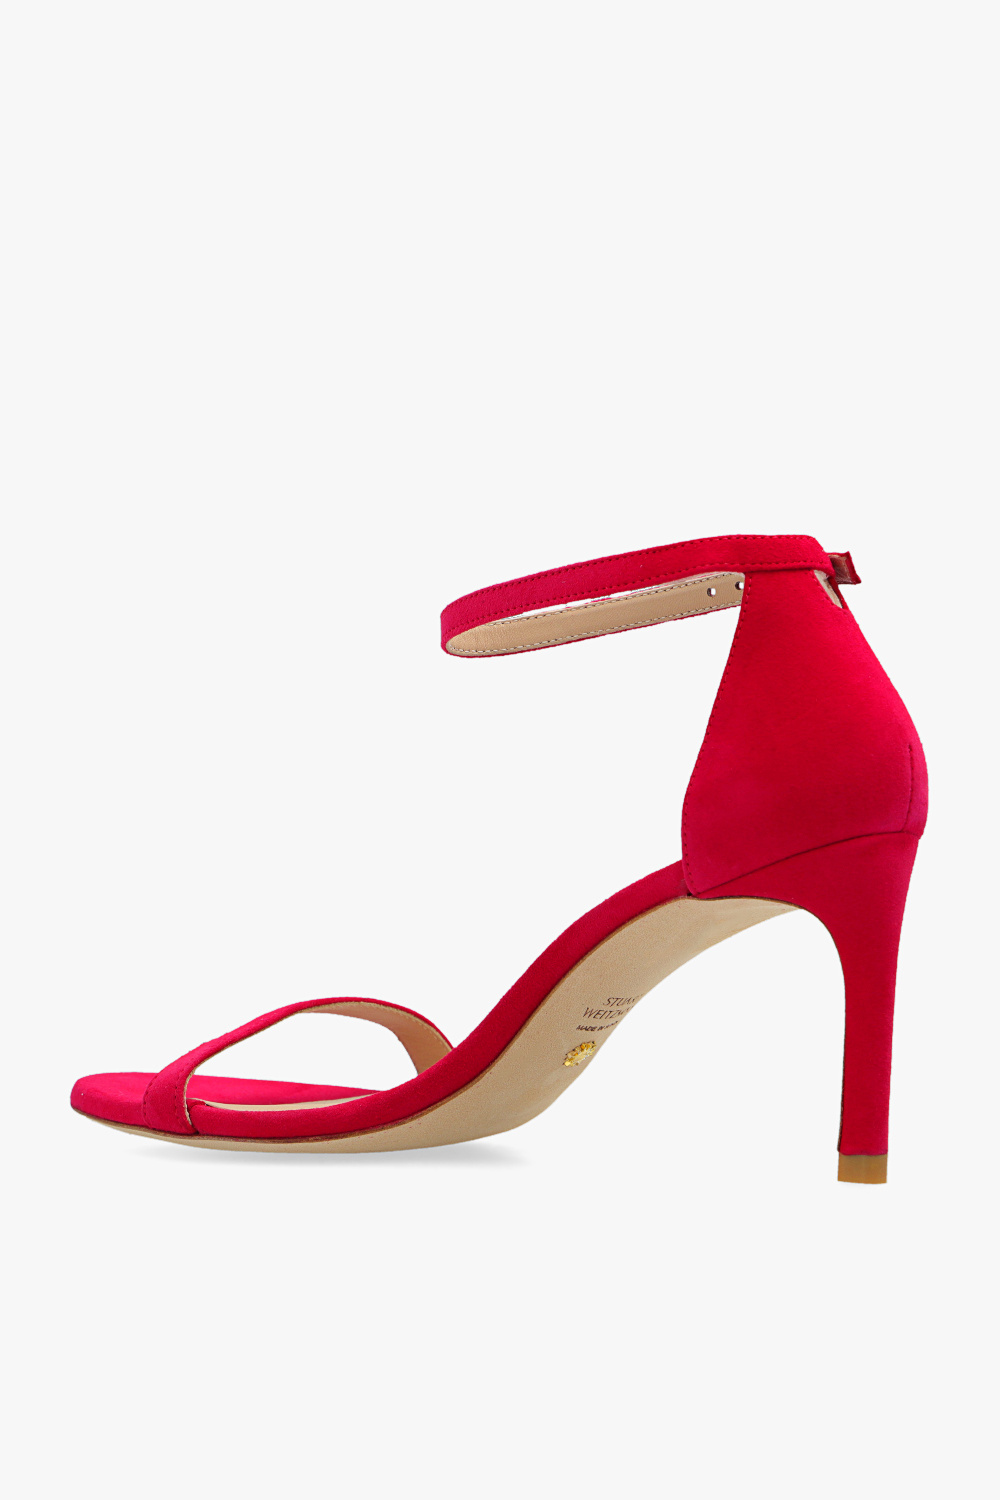 Stuart Weitzman ‘Nunakedstraight’ heeled sandals